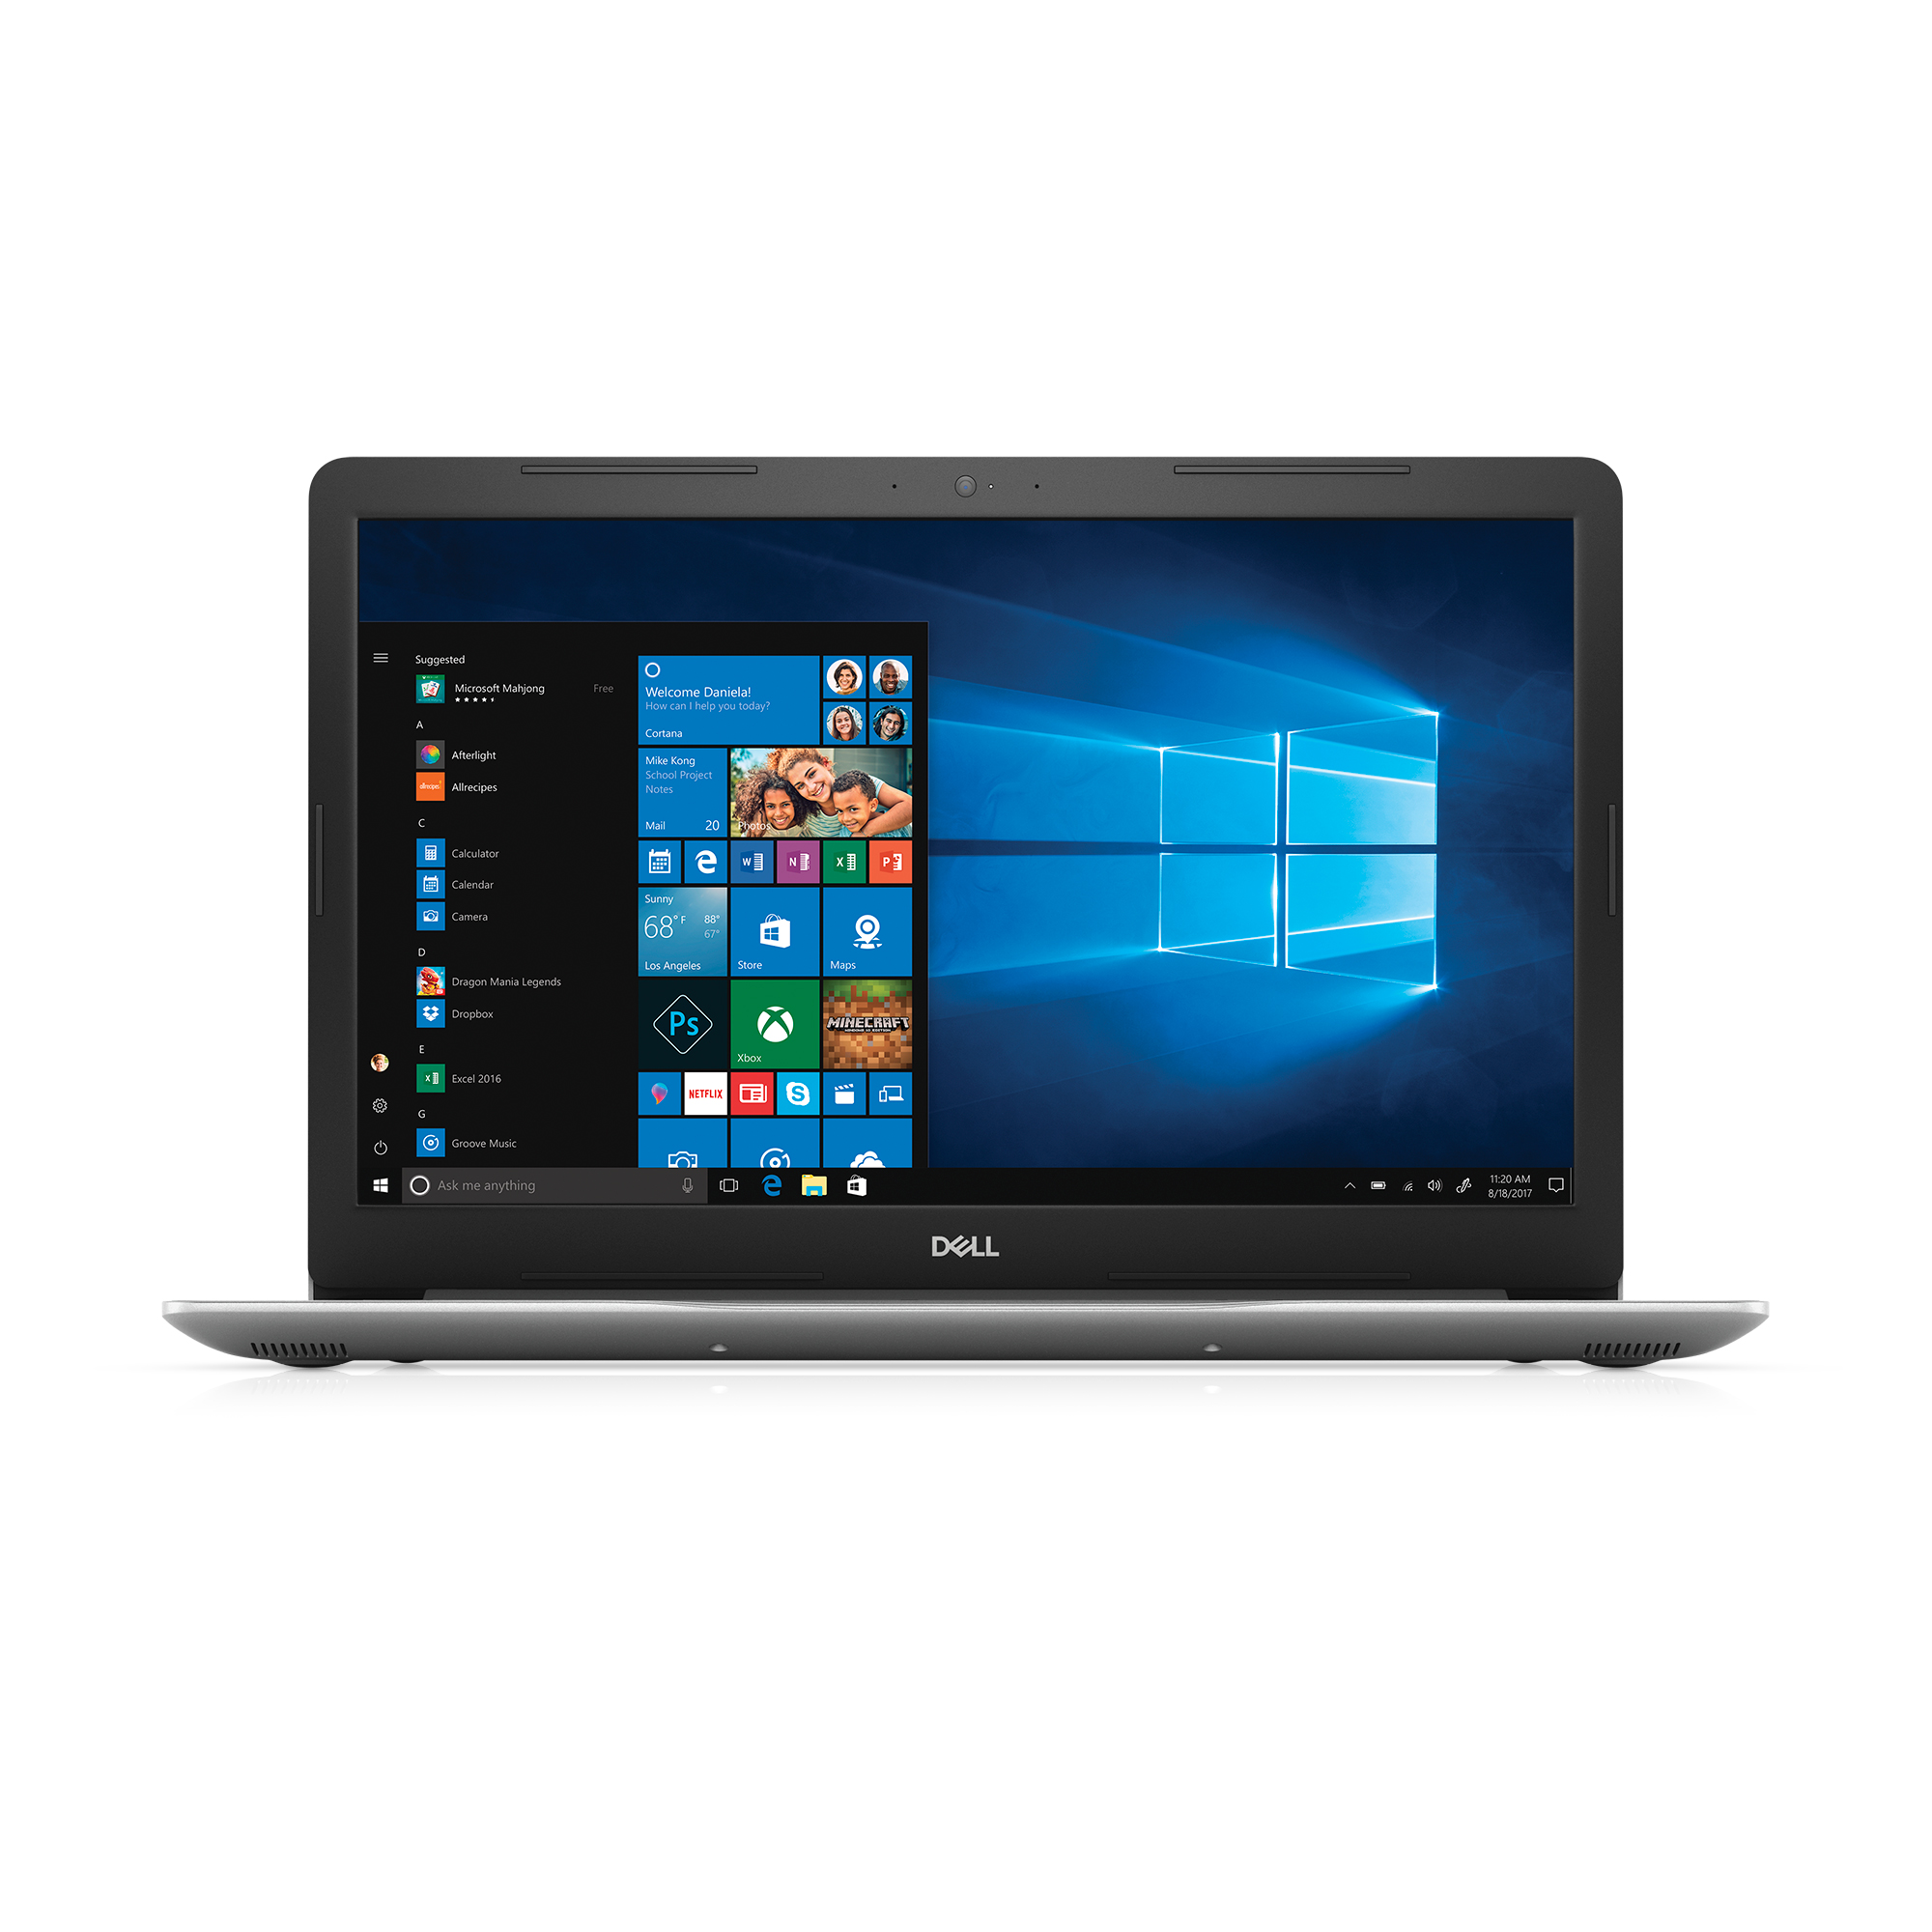 Dell Inspiron 17 5000 Laptop, 17.3'' FHD, Intel Core i7-8550U, 16GB 2400MHz DDR4, 2TB 5400 RPM HDD, AMD Radeon 530 Graphics, i5770-7708SLV - image 4 of 8